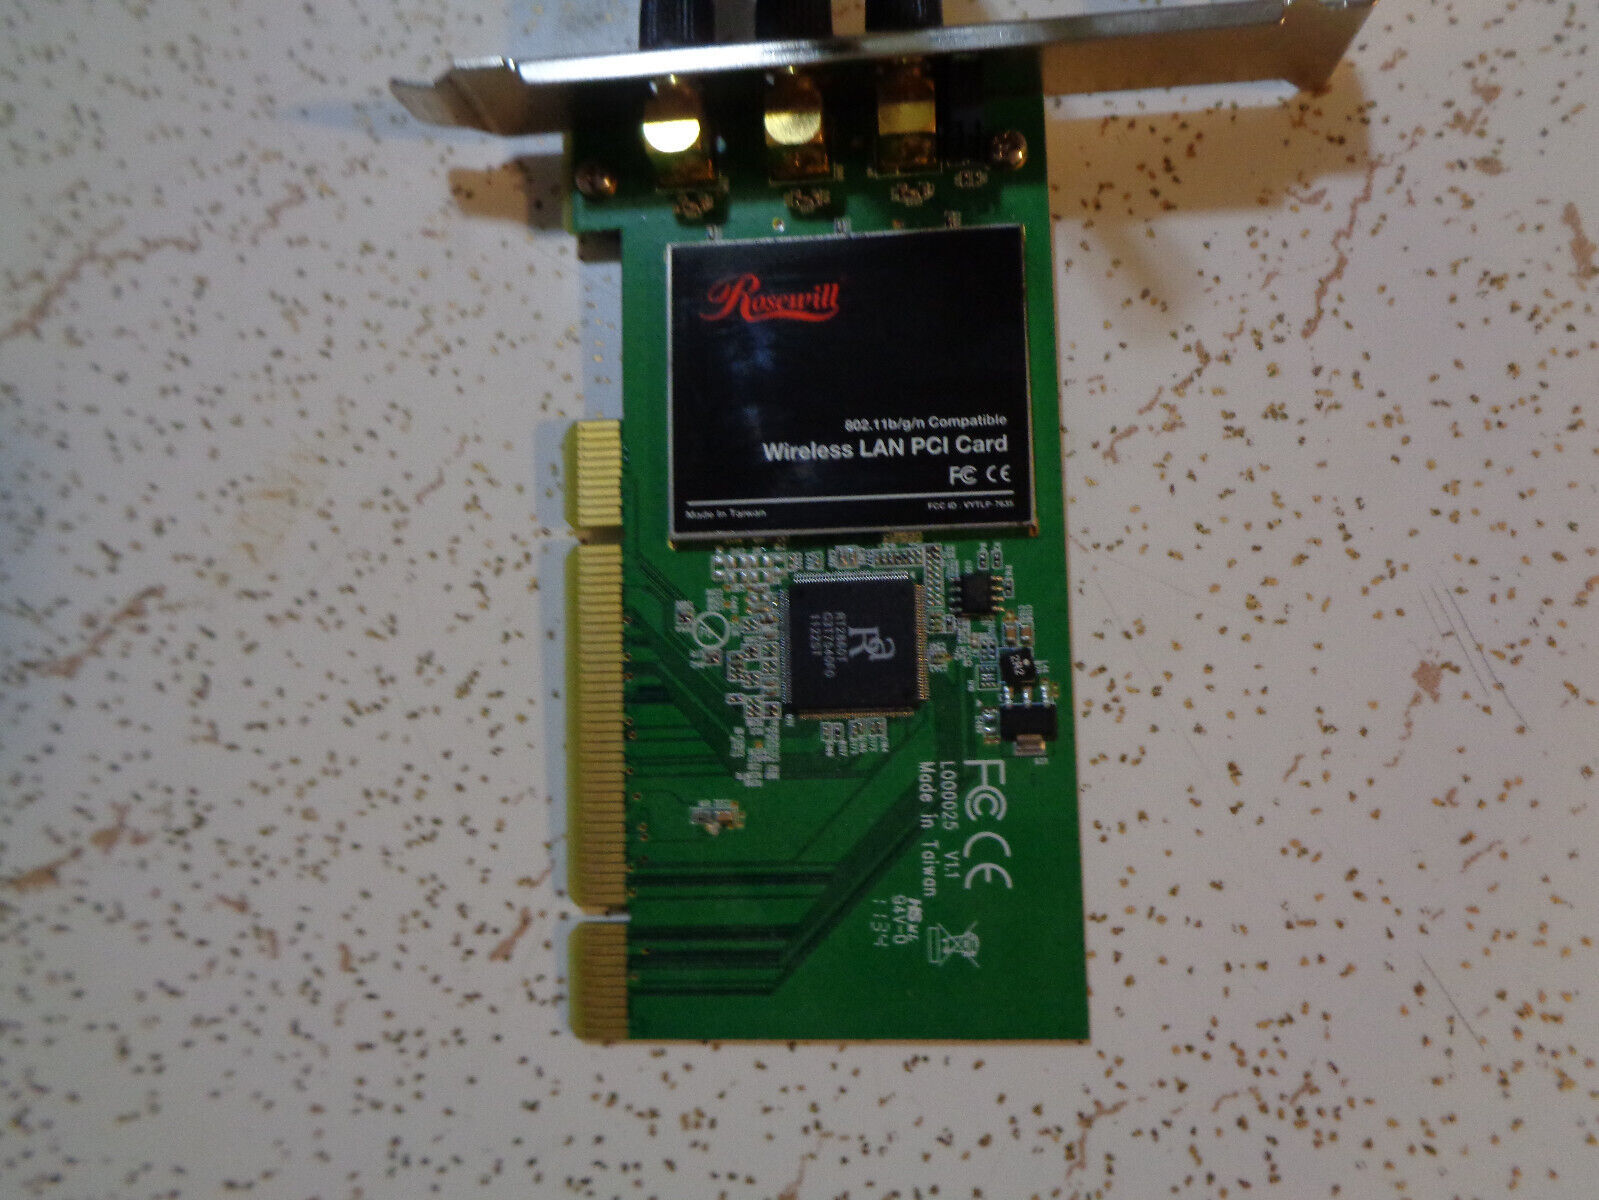 Rosewill 802.11b/g/n Wireless Adapter LAN PCI Card - $8.00